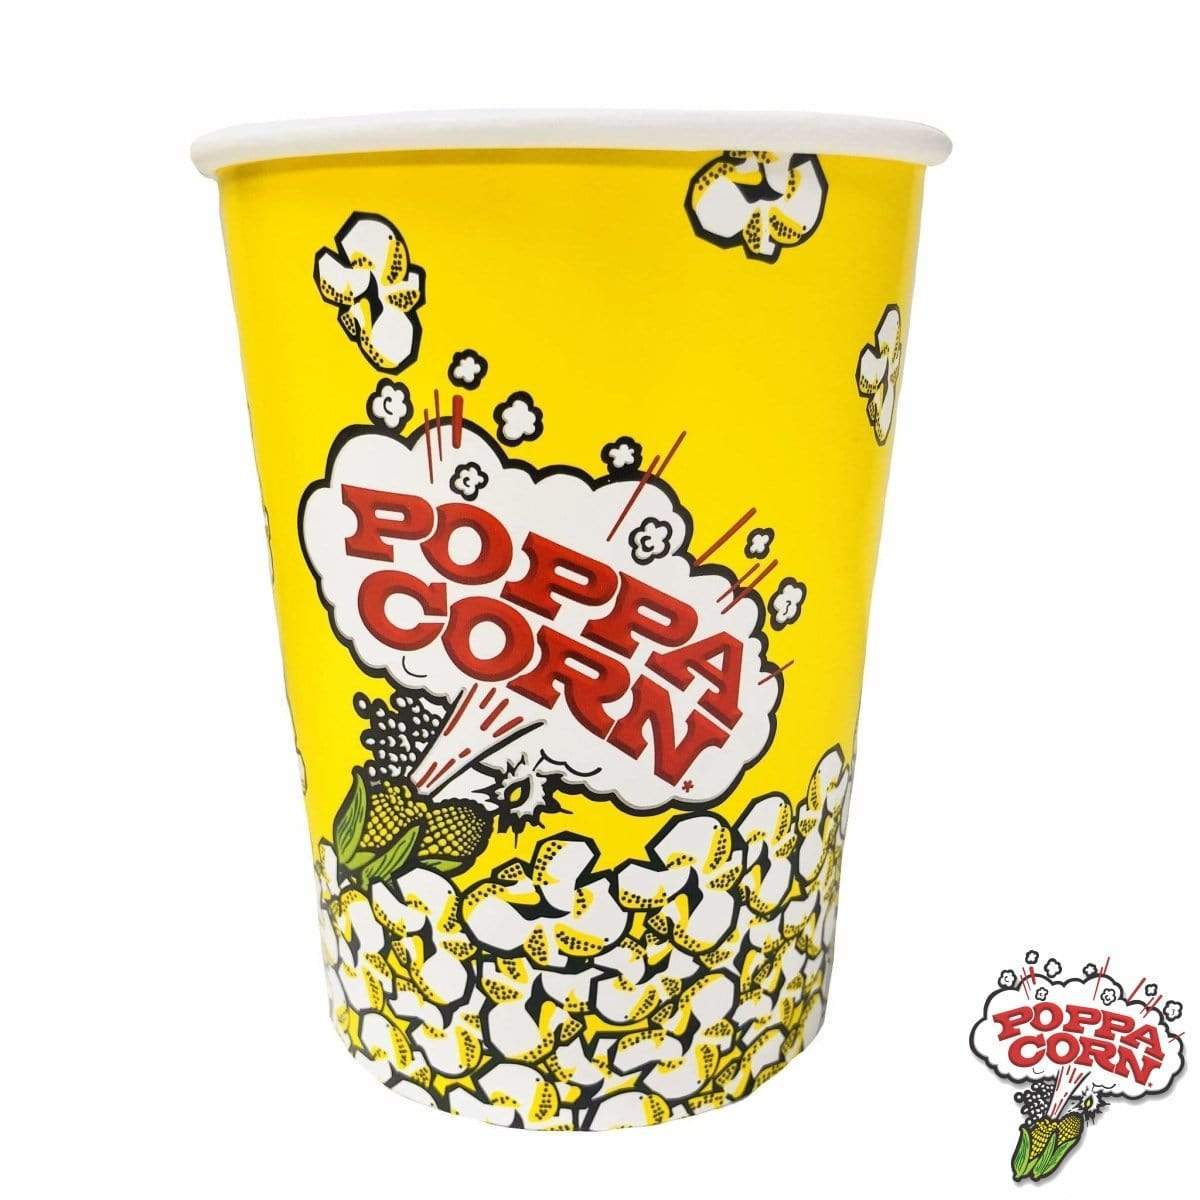 CUP032 - Rolled Rim Popcorn Cups - Medium 32 oz - 500/Case